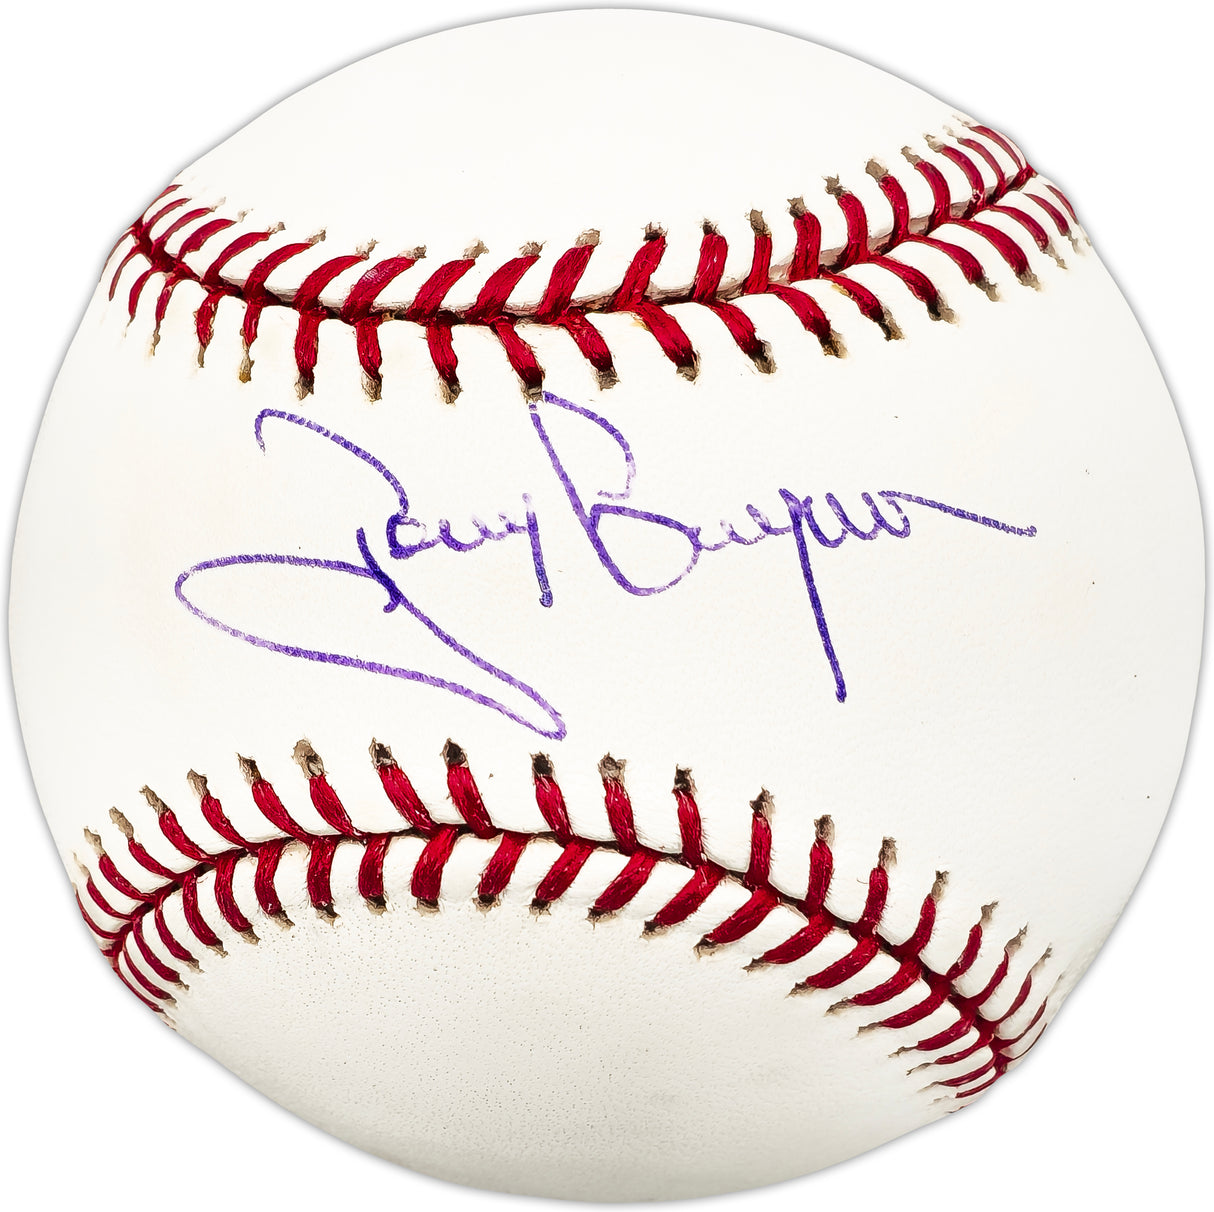 Tony Gwynn Autographed Official MLB Baseball San Diego Padres PSA/DNA #G20403